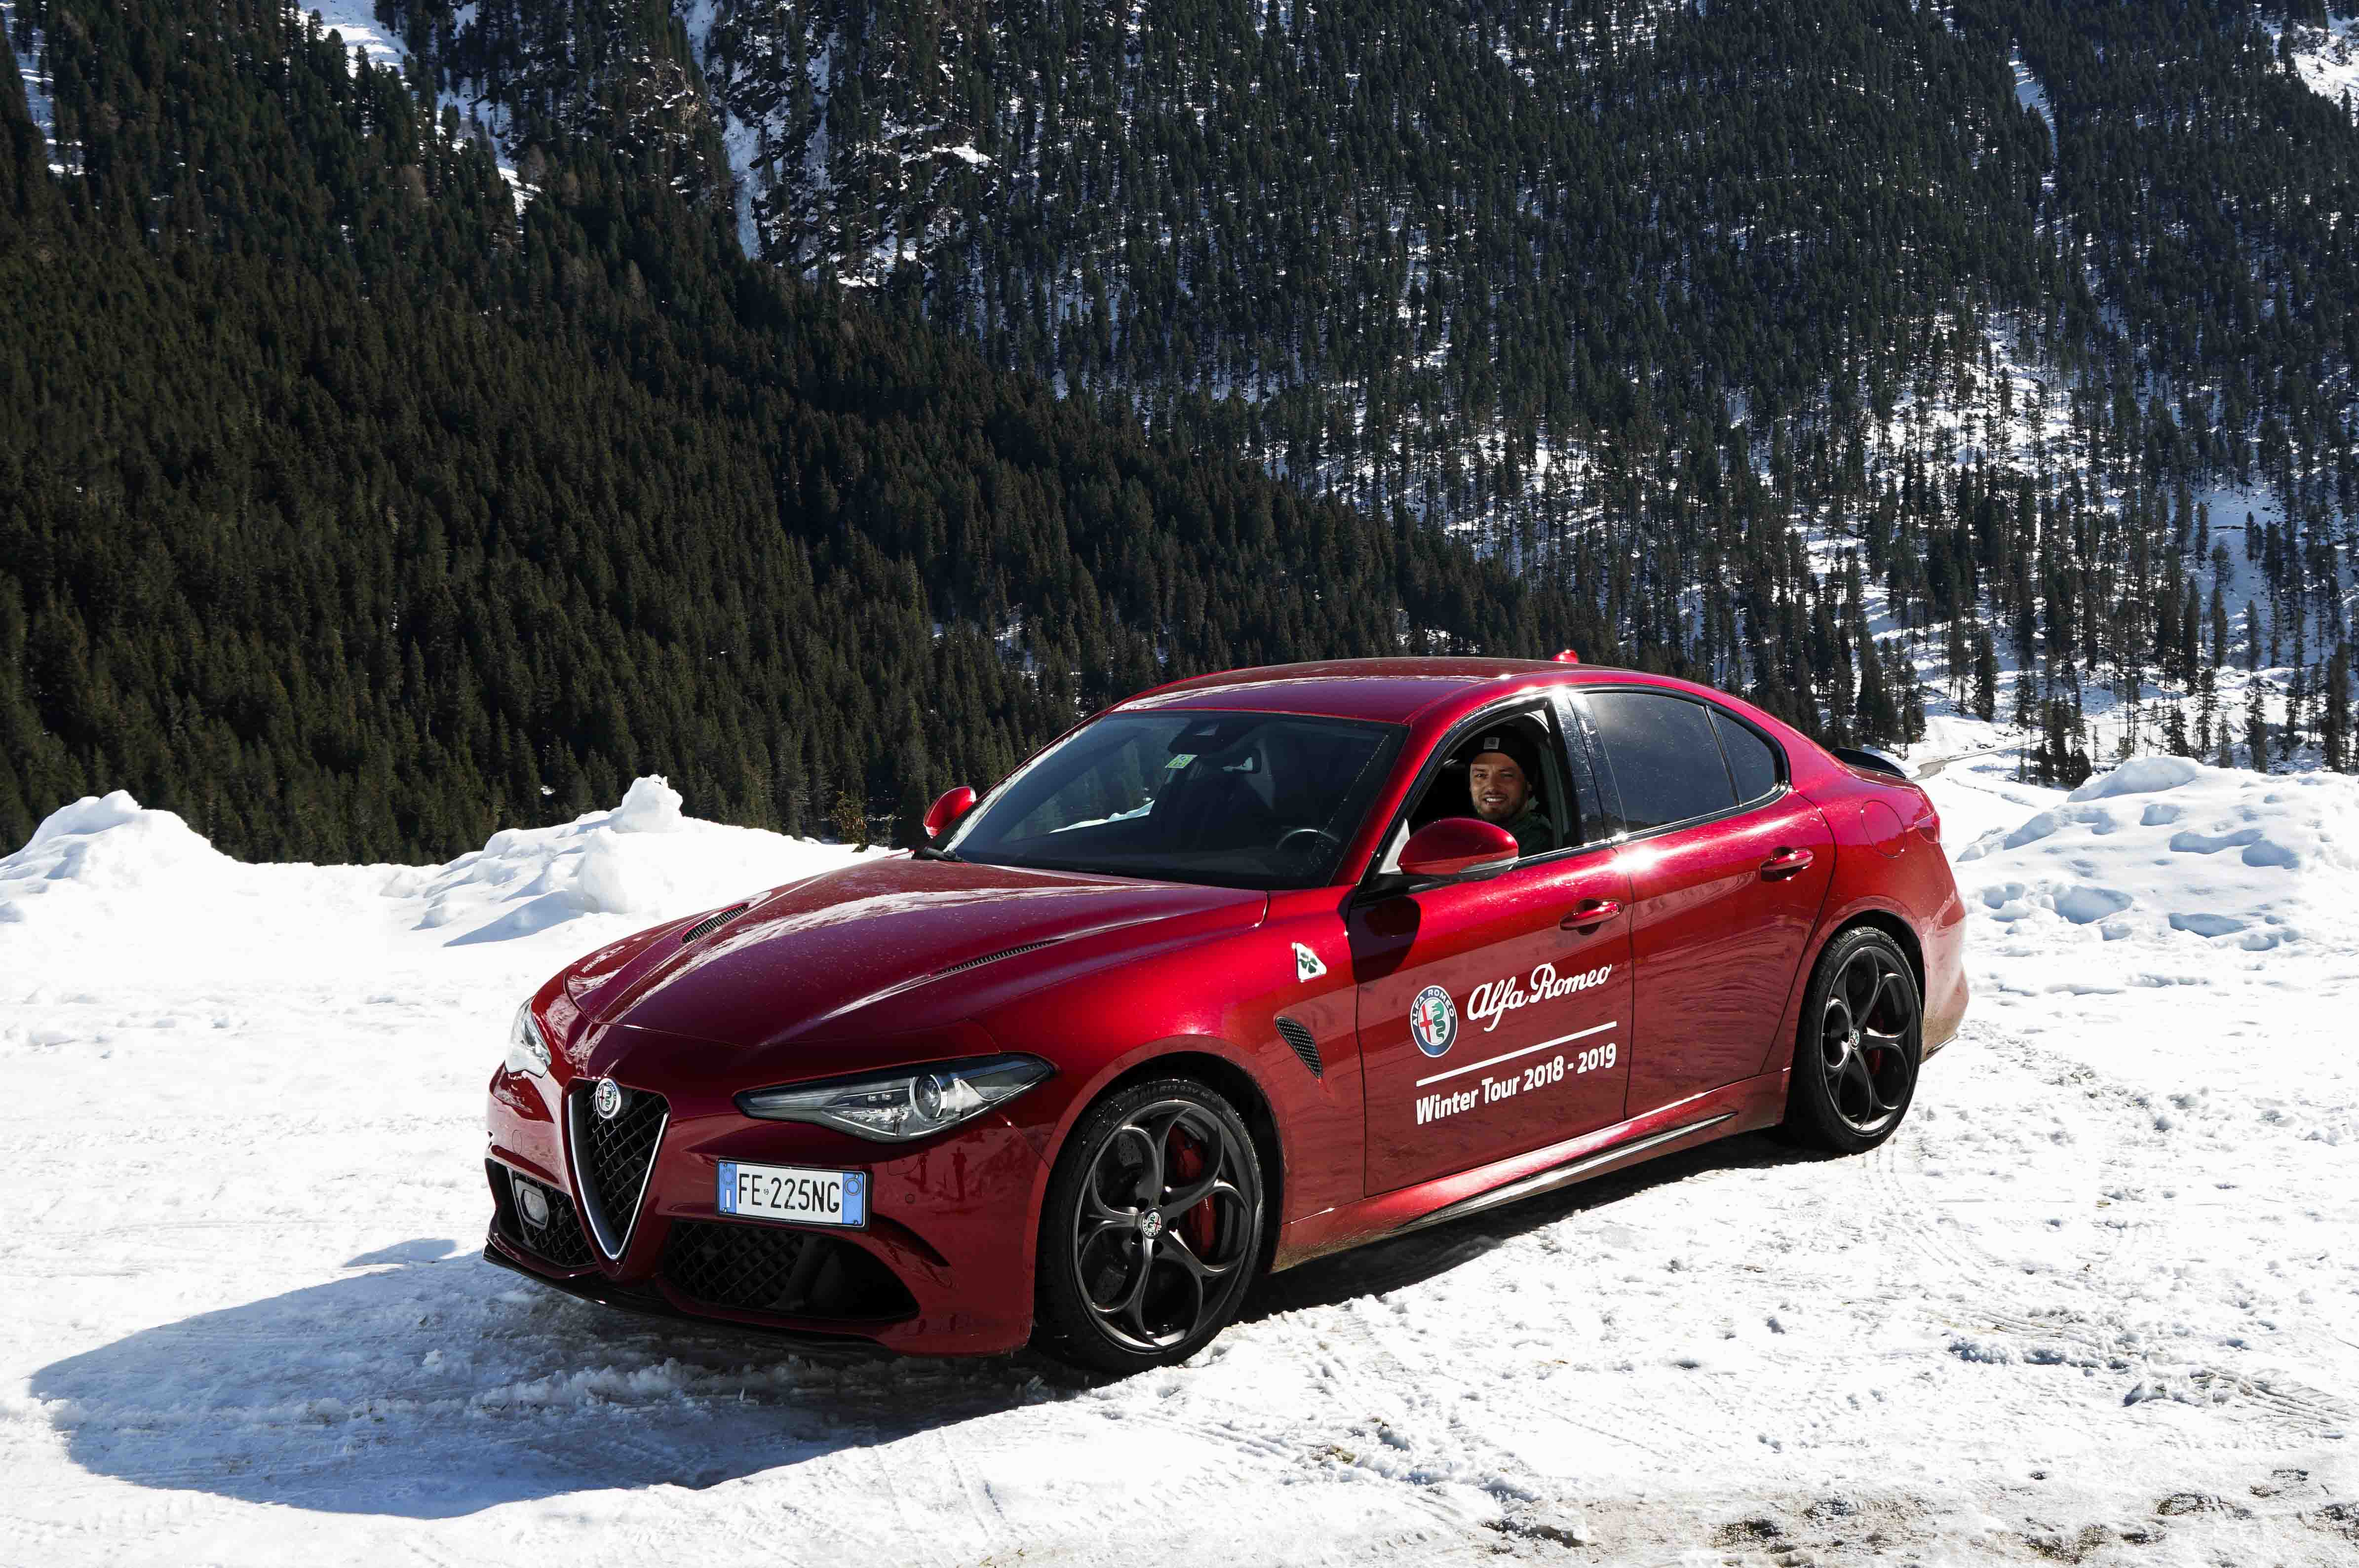 Alfa Romeo Winter Tour 2019 mit dem Alfa Romeo Stelvio Quadrifoglio